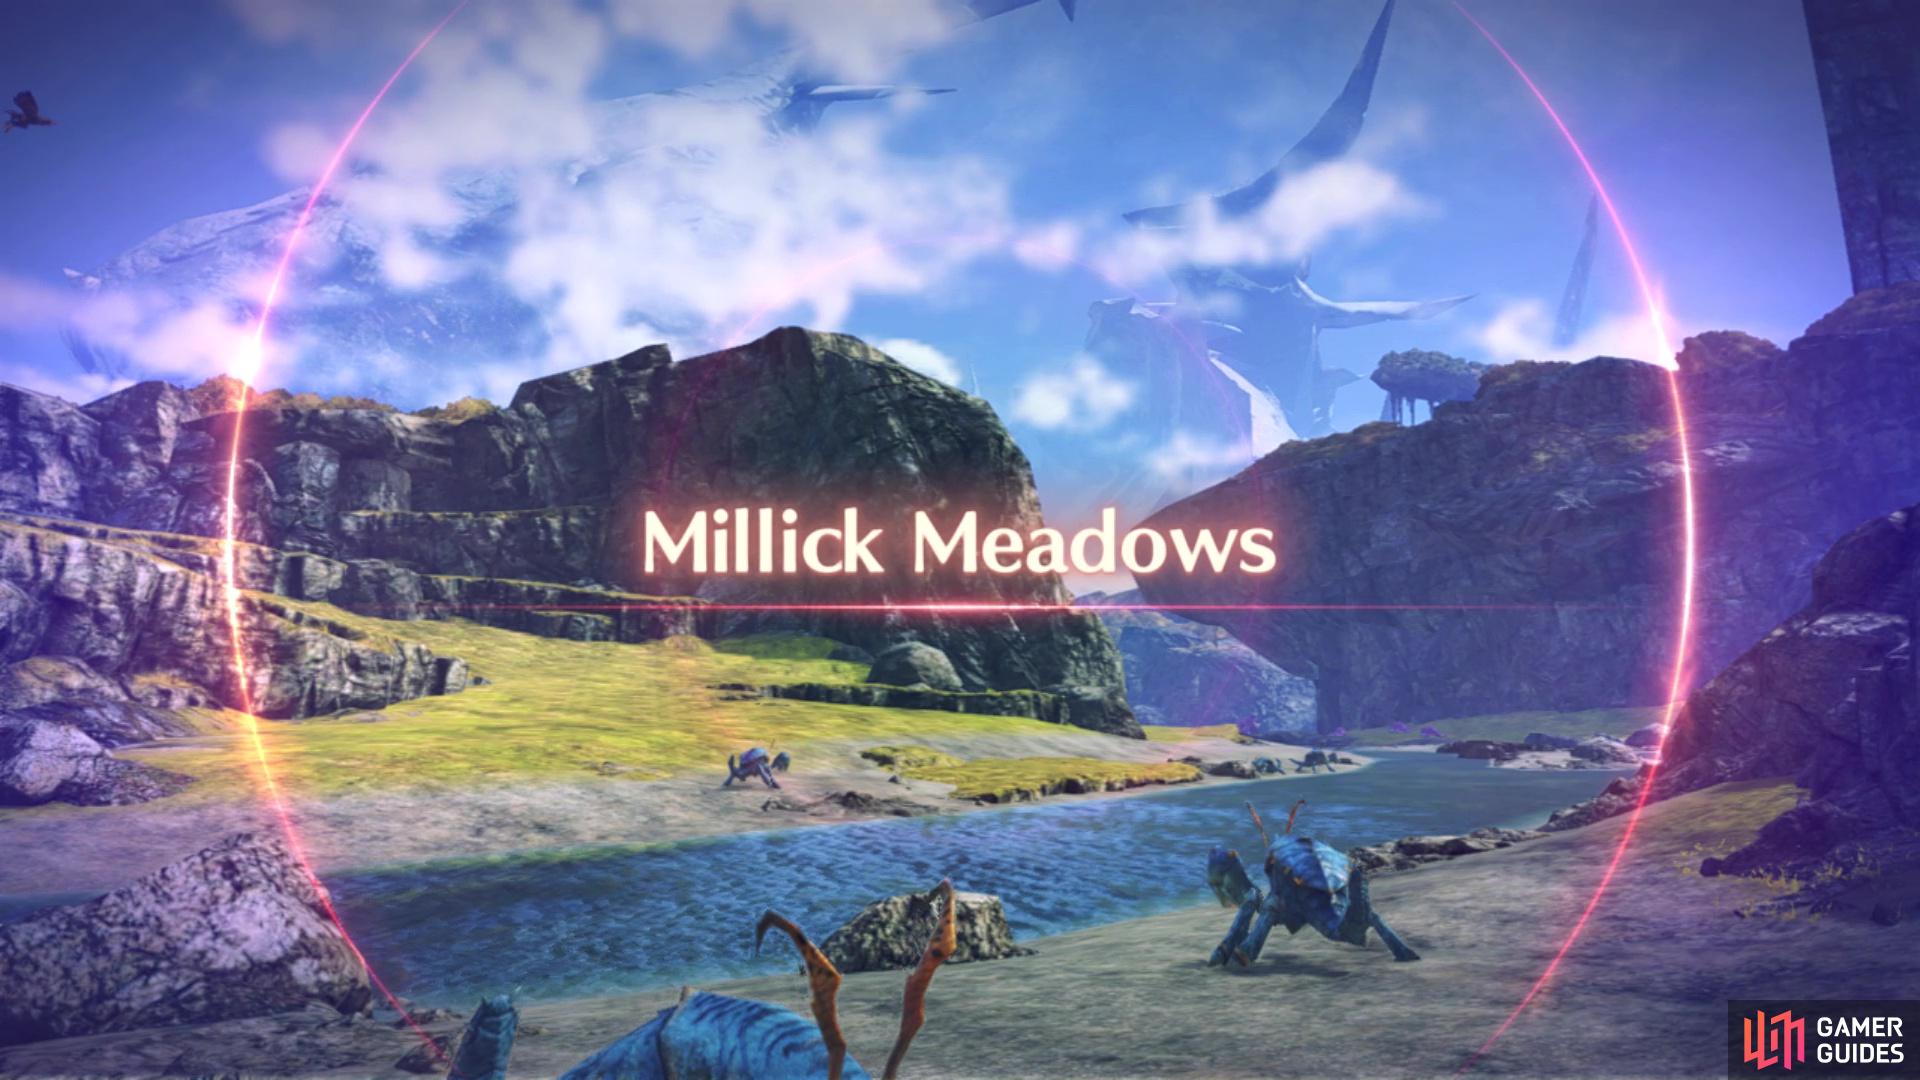 Millick Meadows